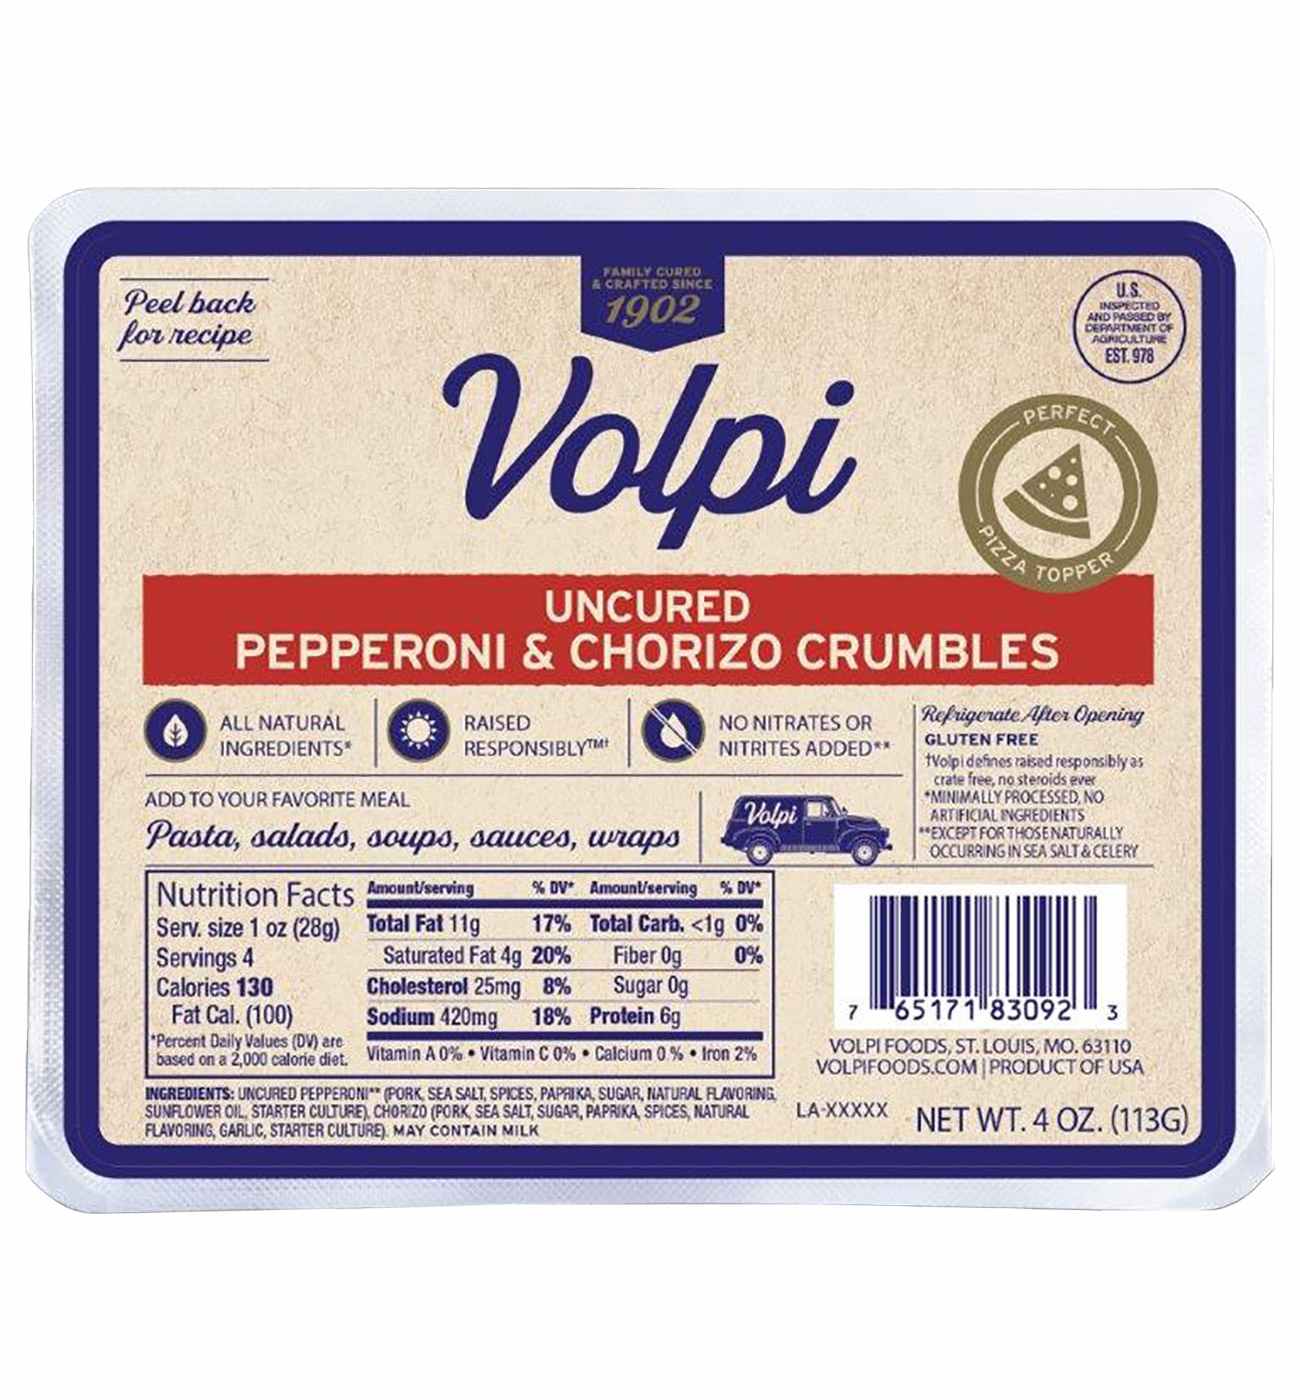 Volpi Uncured Pepperoni & Chorizo Crumbles; image 1 of 2